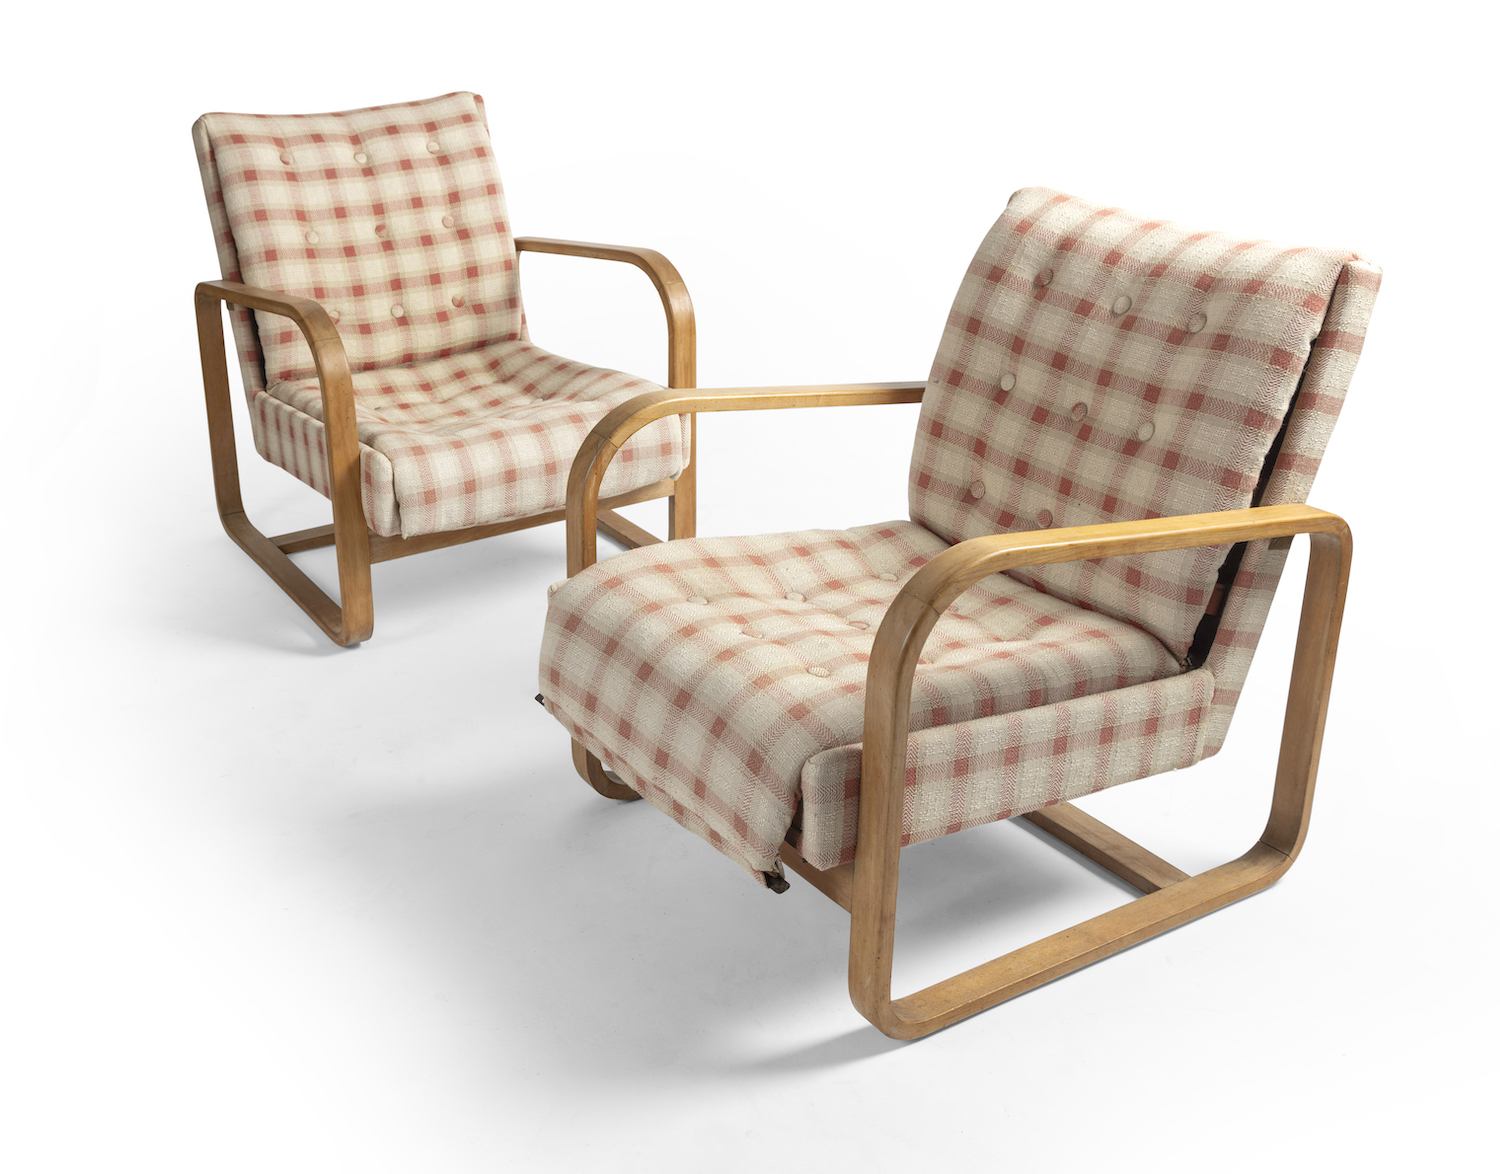 Serge Chermayeff (Russian -British 1900-1996) Pair of 'Plan' Chairs, designed 1933